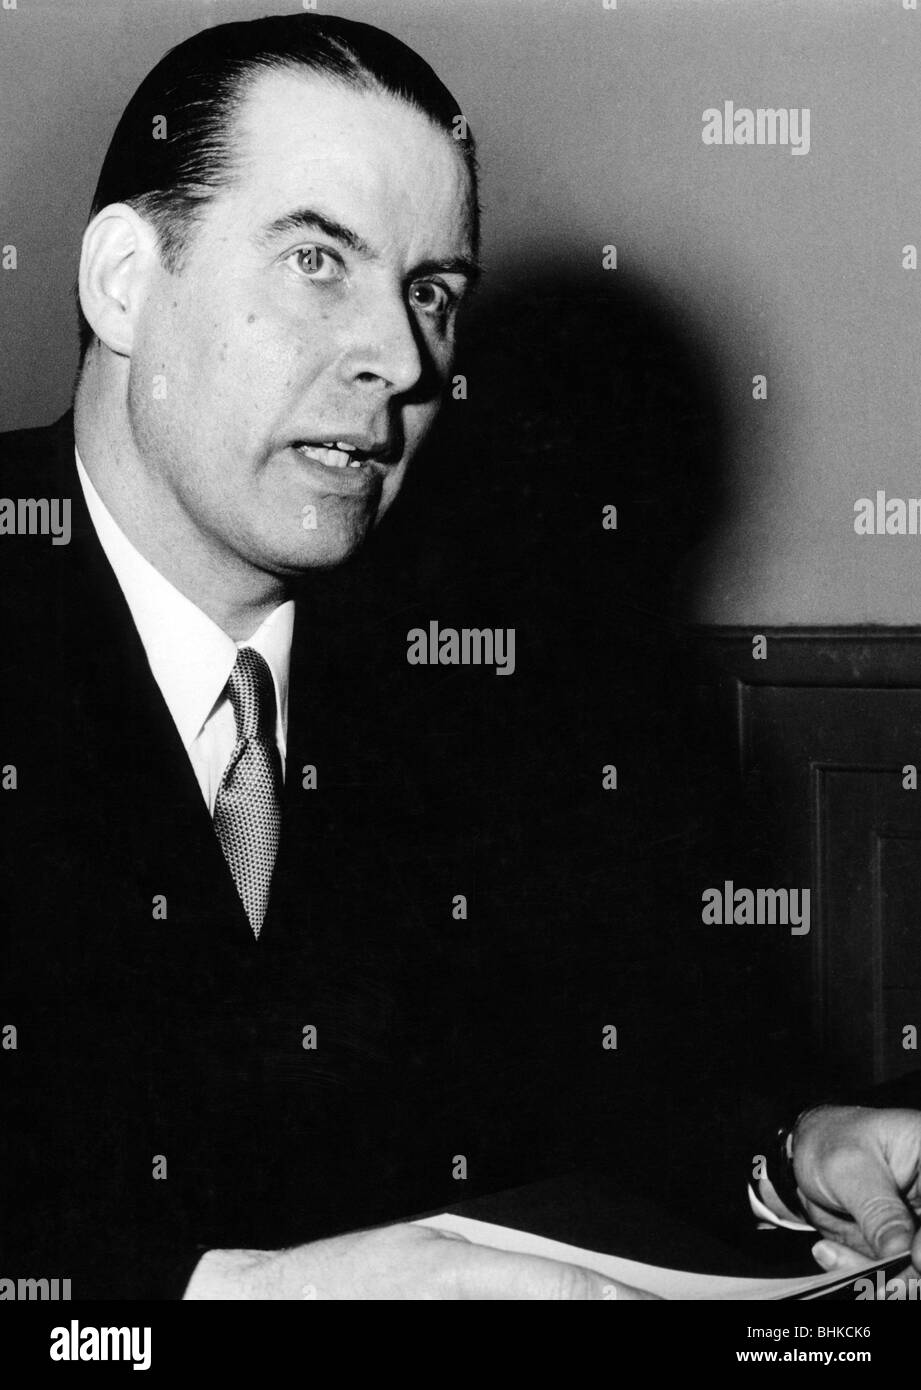 Schroeder, Gerhard, 11.10.1910 - 31.12.1989, German politician (CDU), Federal Minister of the Interior 20.10.1953 - 13.11.1961, portrait, 1950s, , Stock Photo